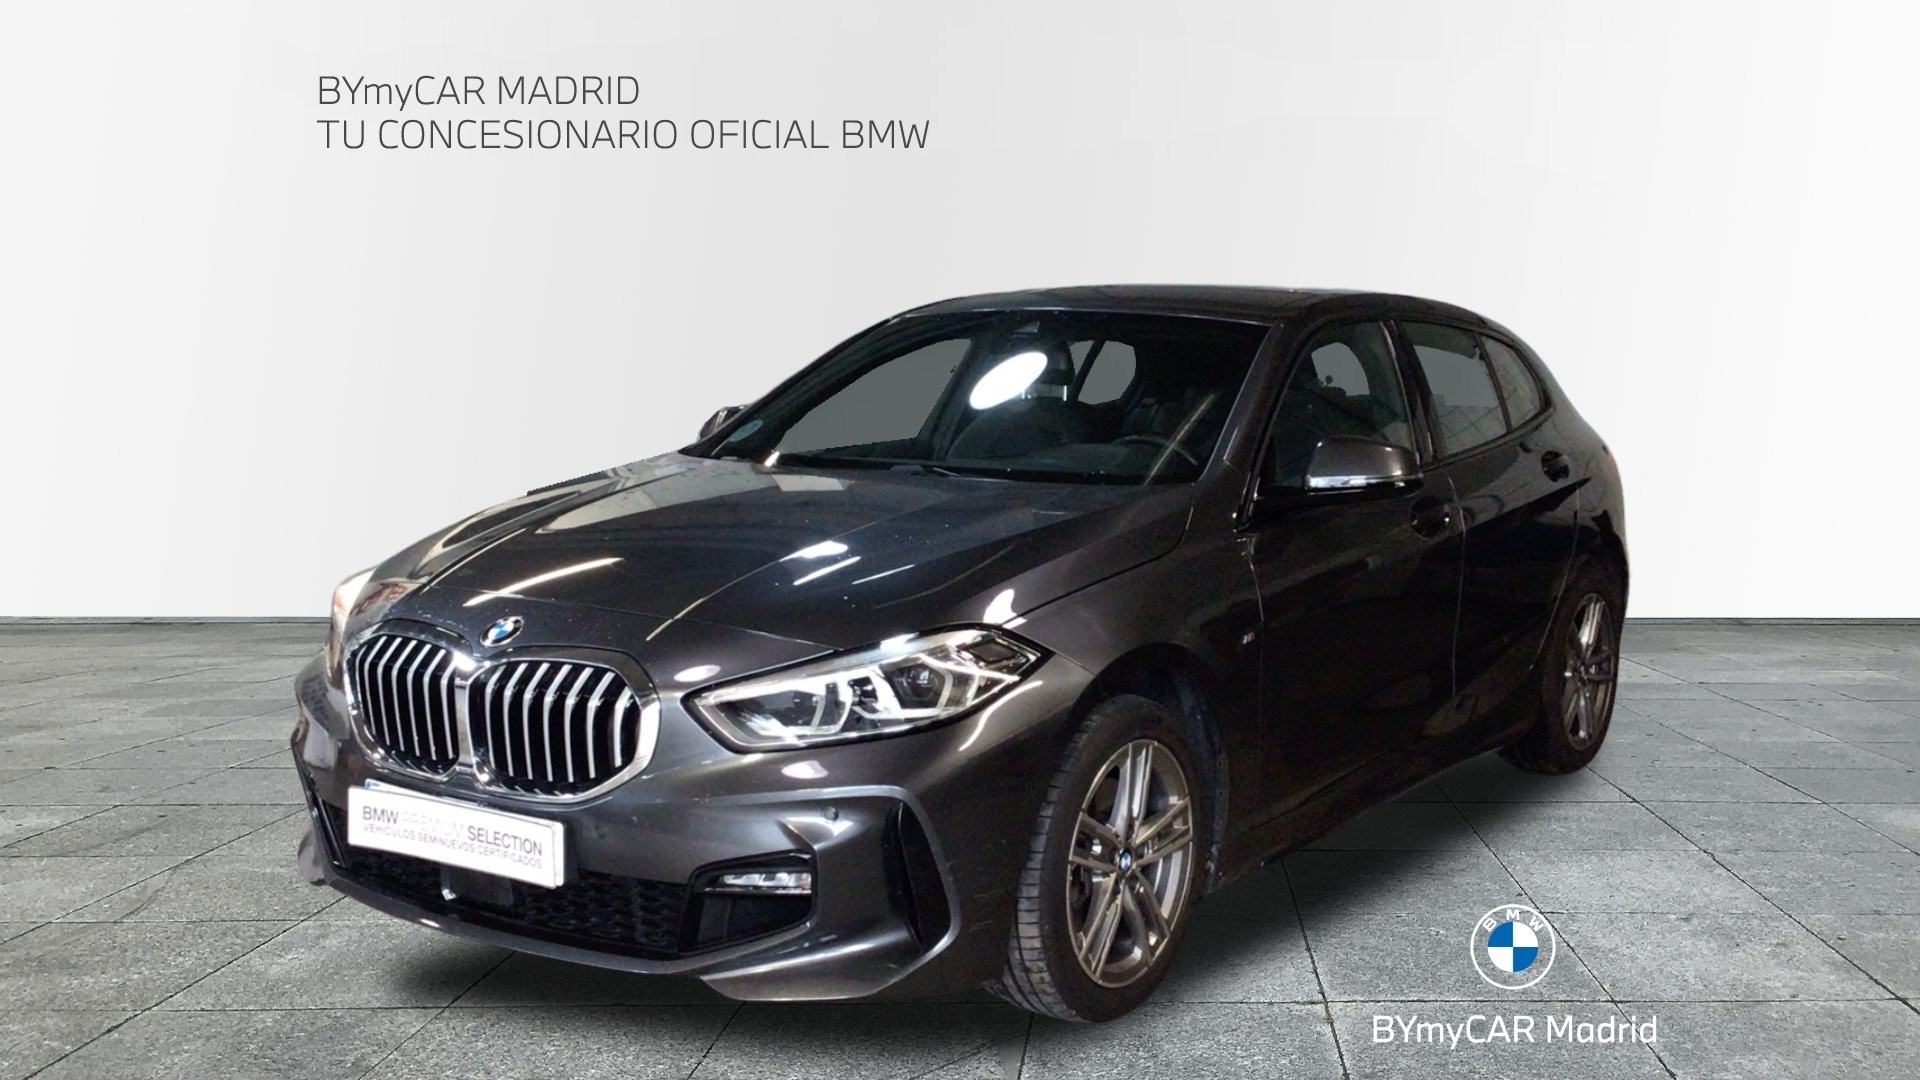 BMW Serie 1 116d 85 kW (116 CV) 11